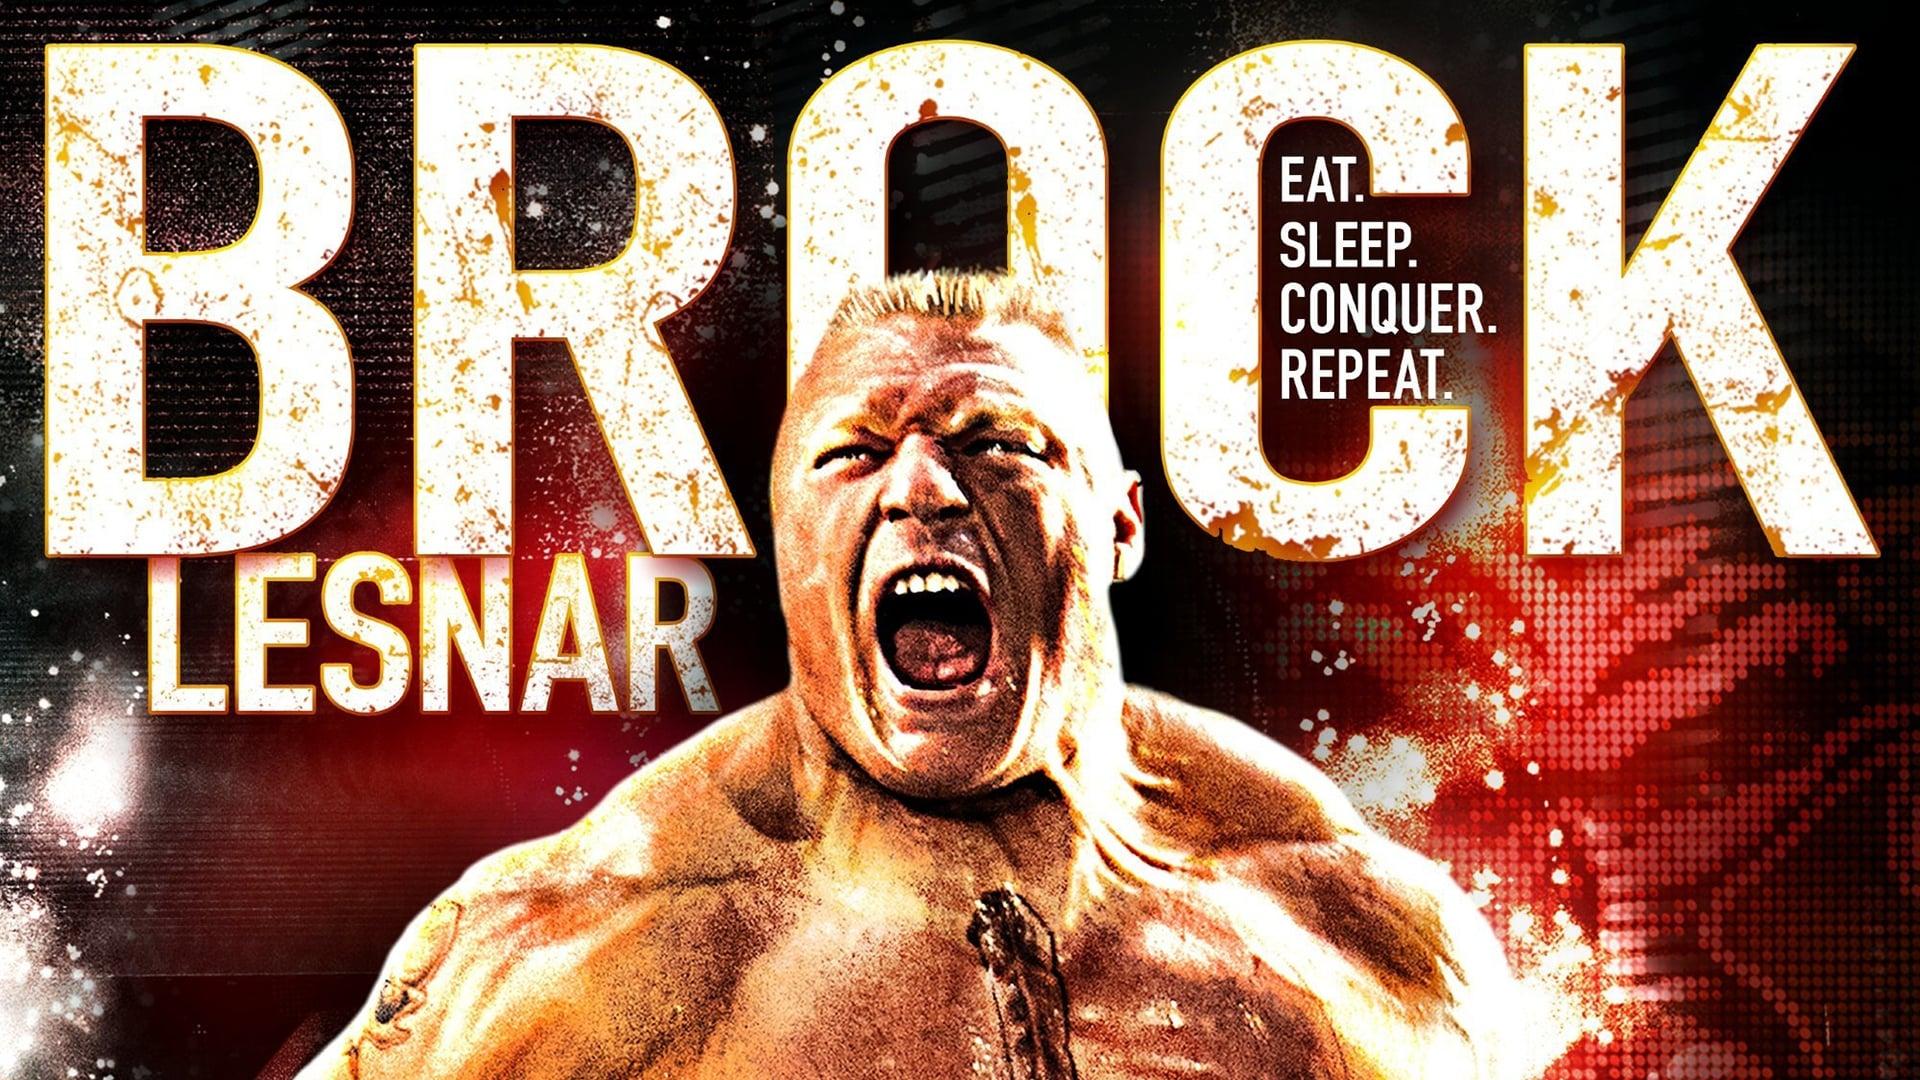 Brock Lesnar: Eat, Sleep. Conquer. Repeat backdrop